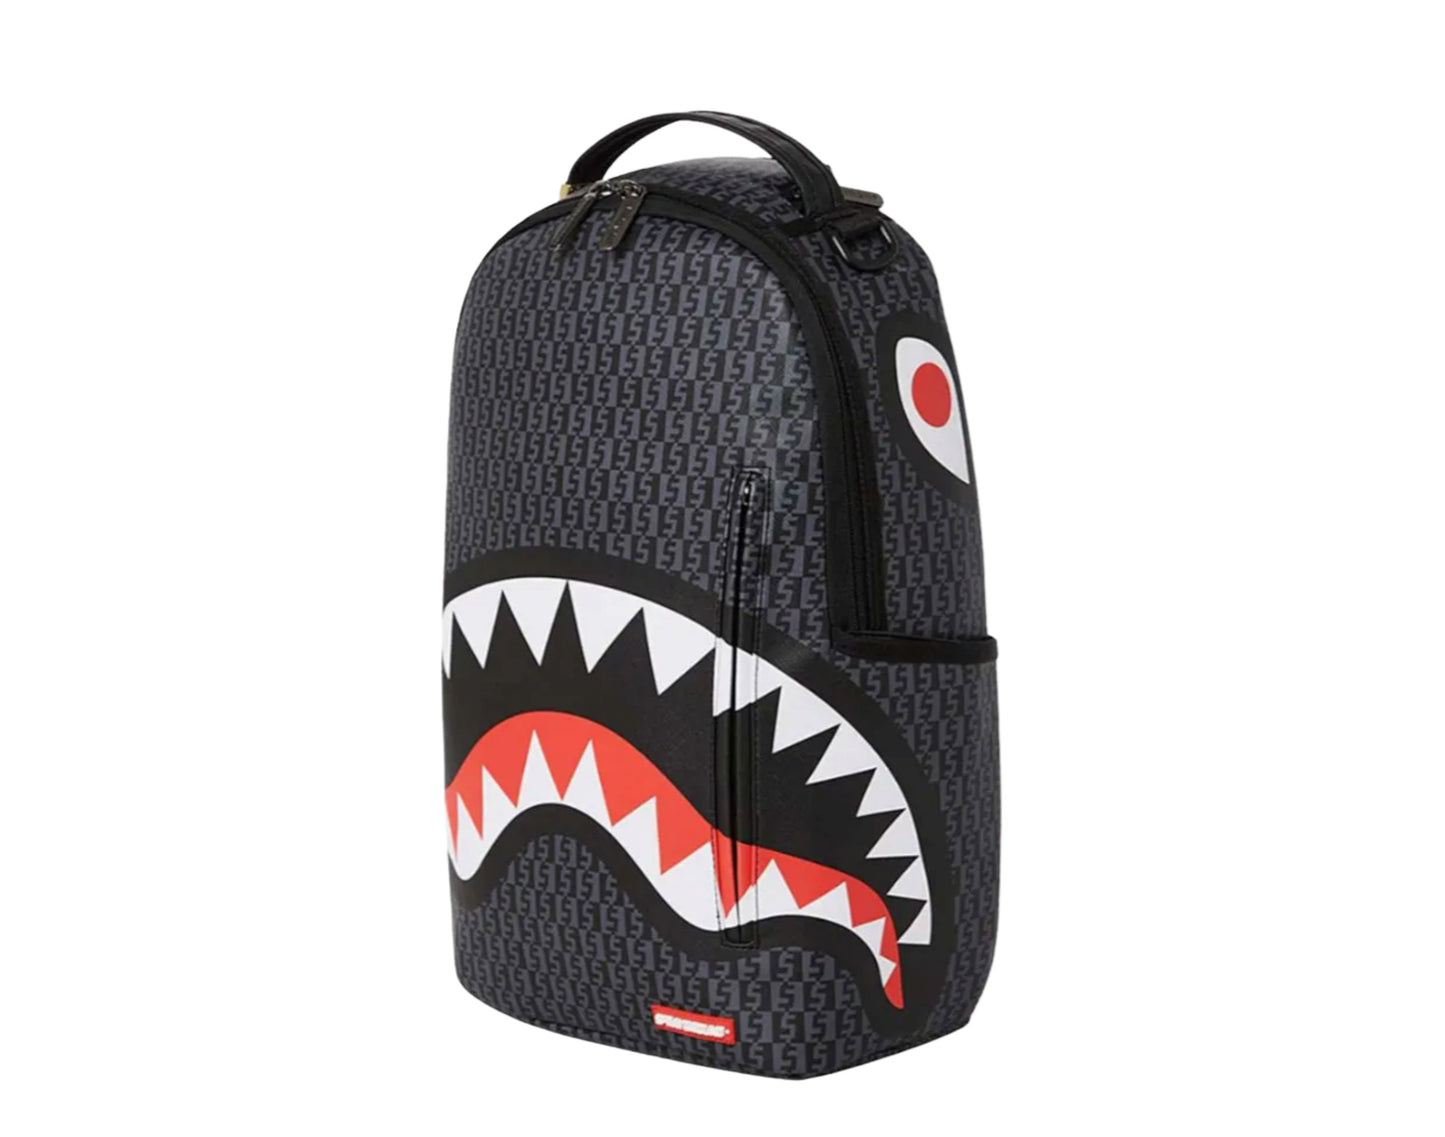 Cashin Checks shark-motif backpack, Sprayground